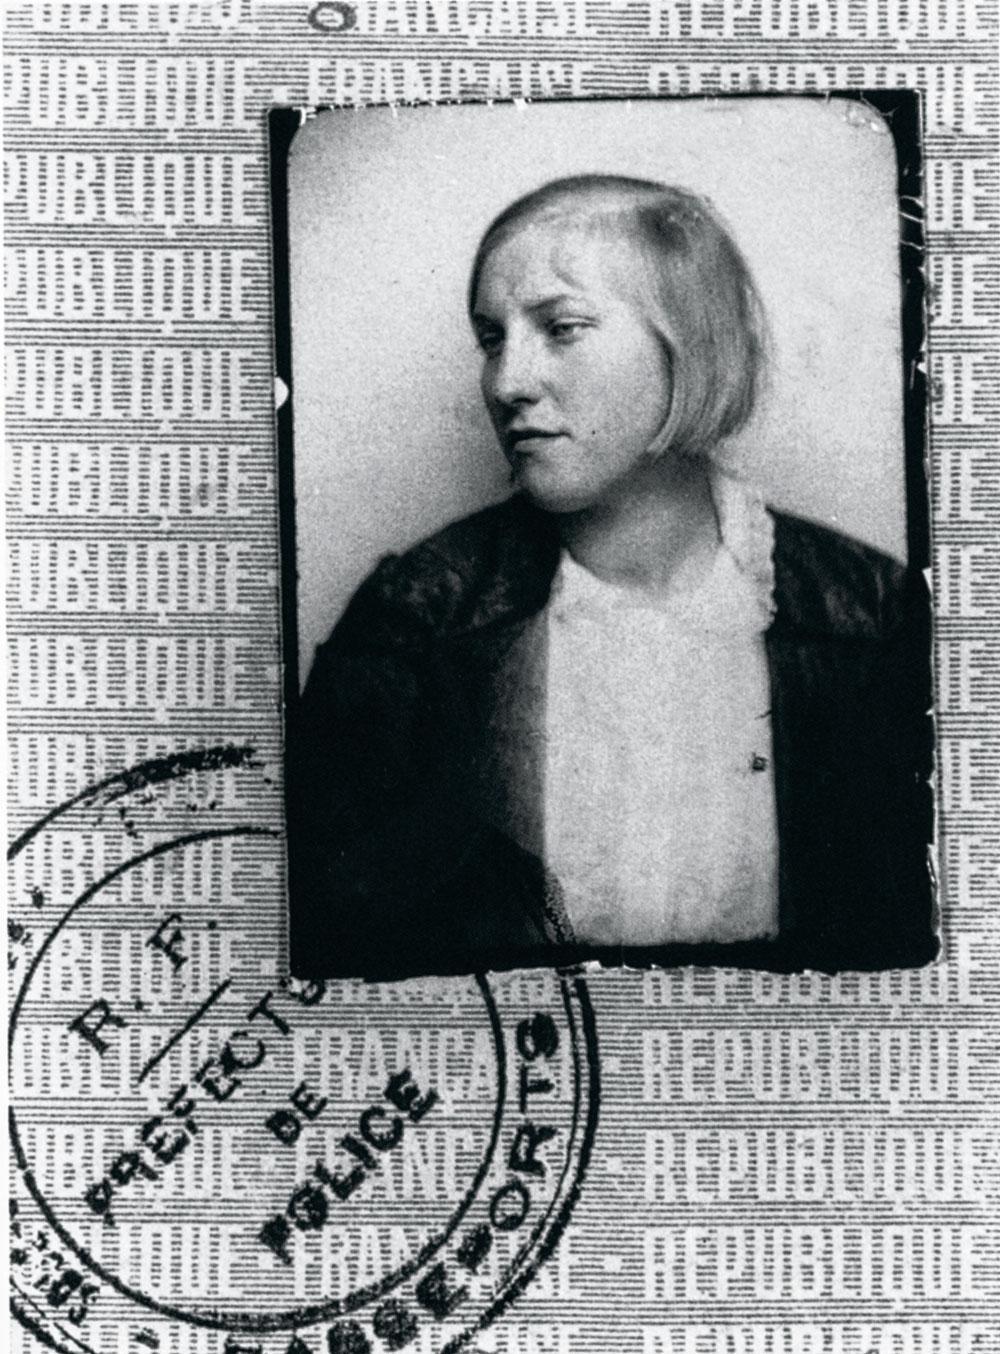 Marie-Thérèse Walter